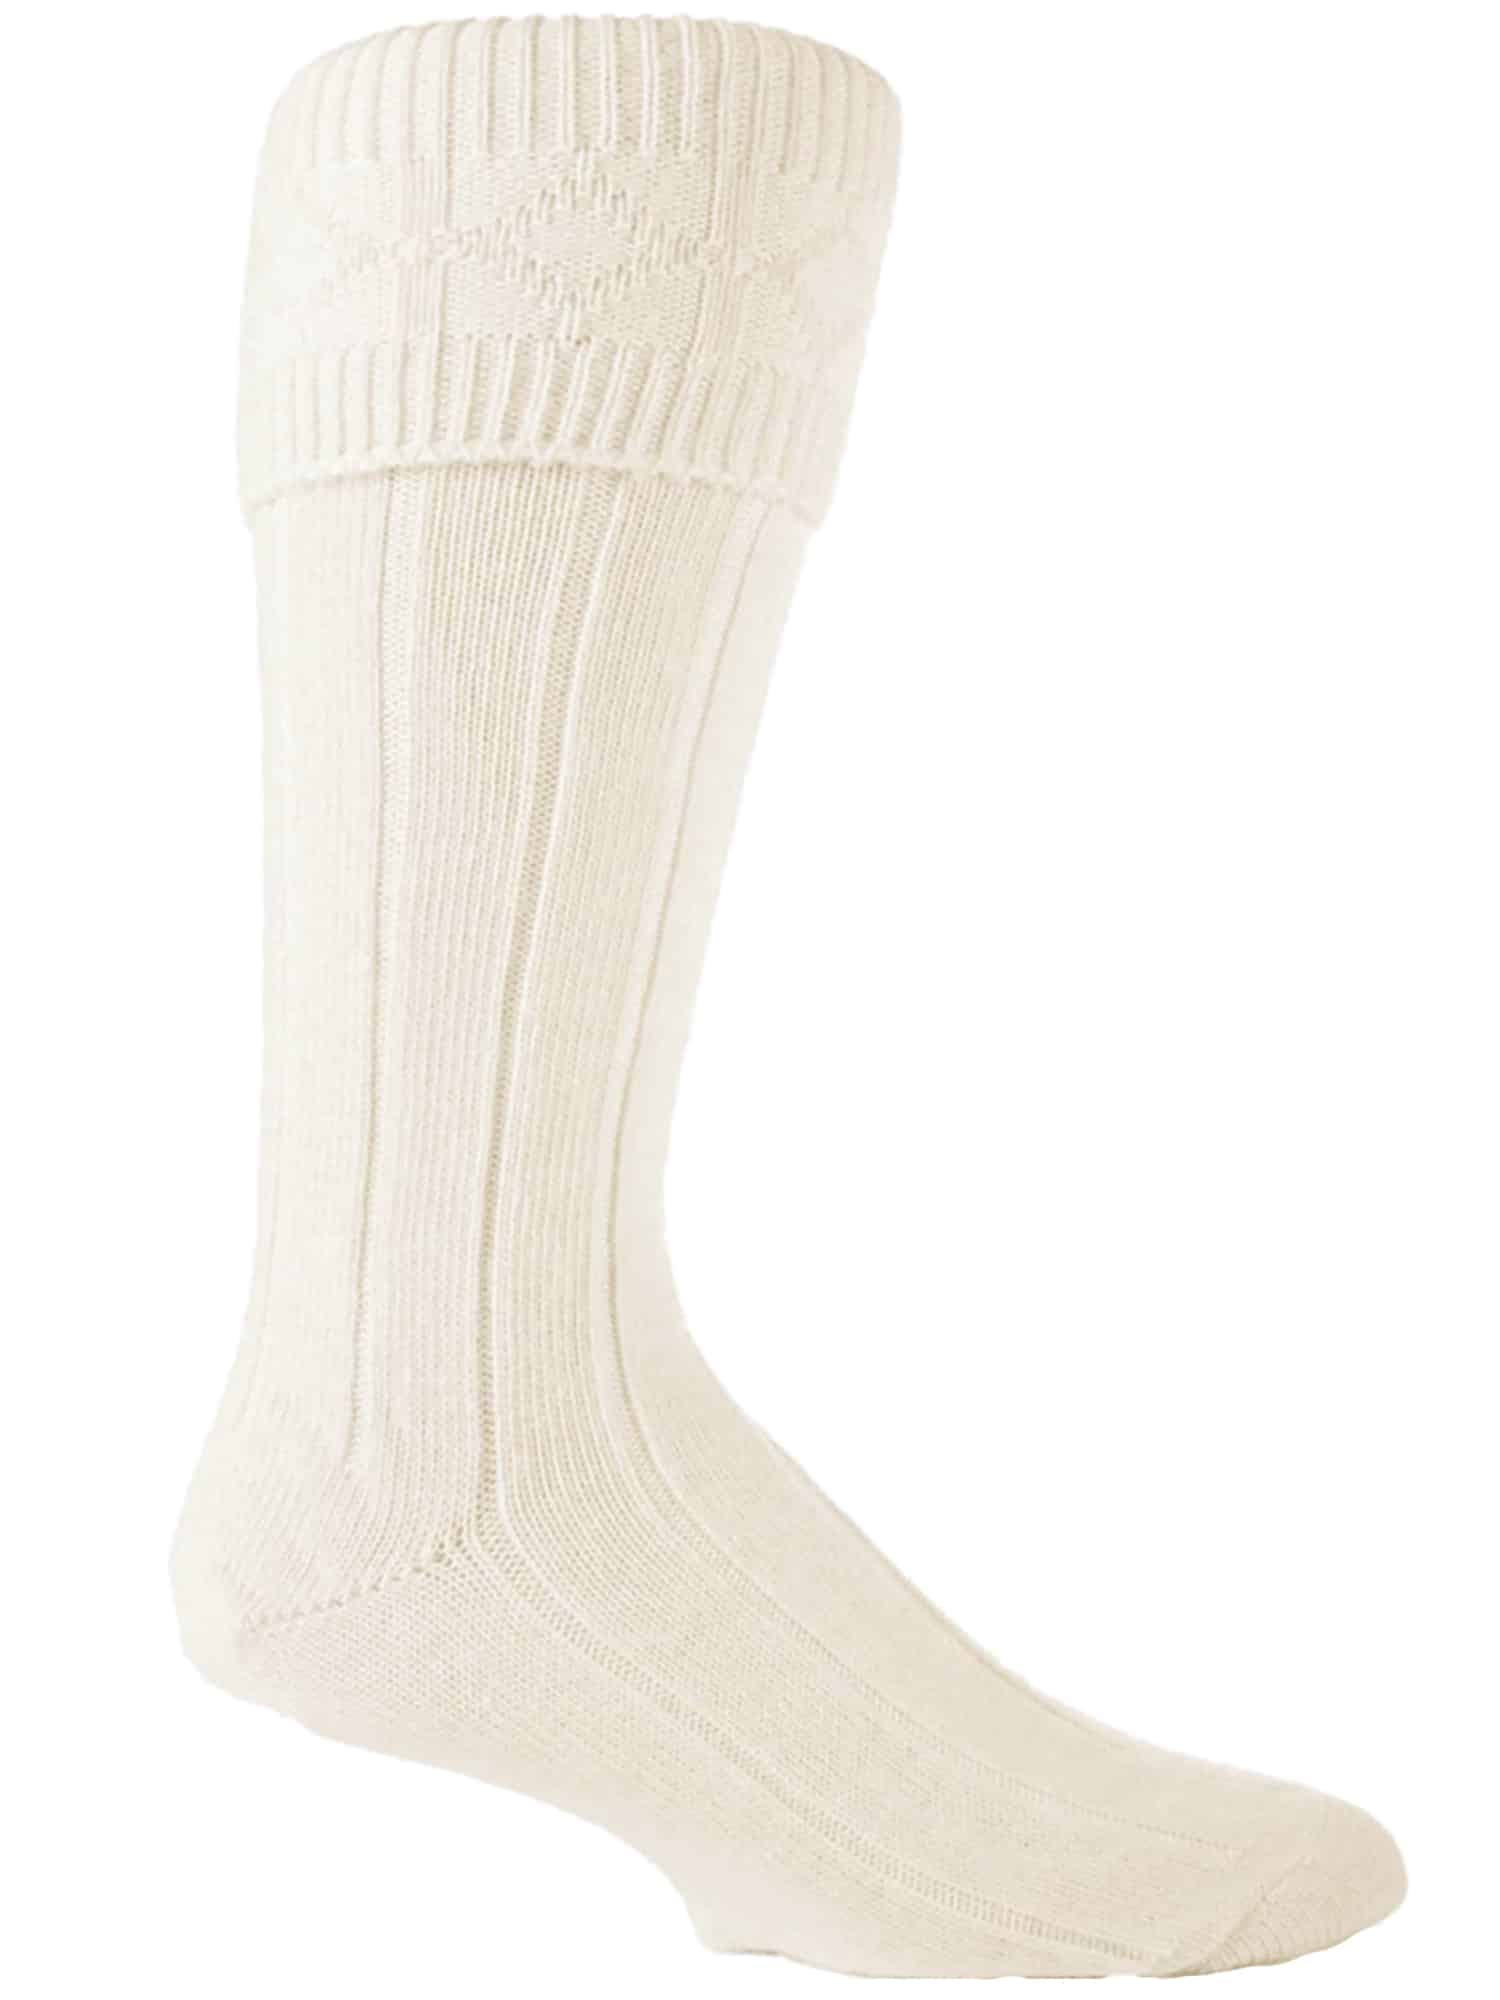 SOCK SHOP Long Wool Kilt Socks- Mens 6-11